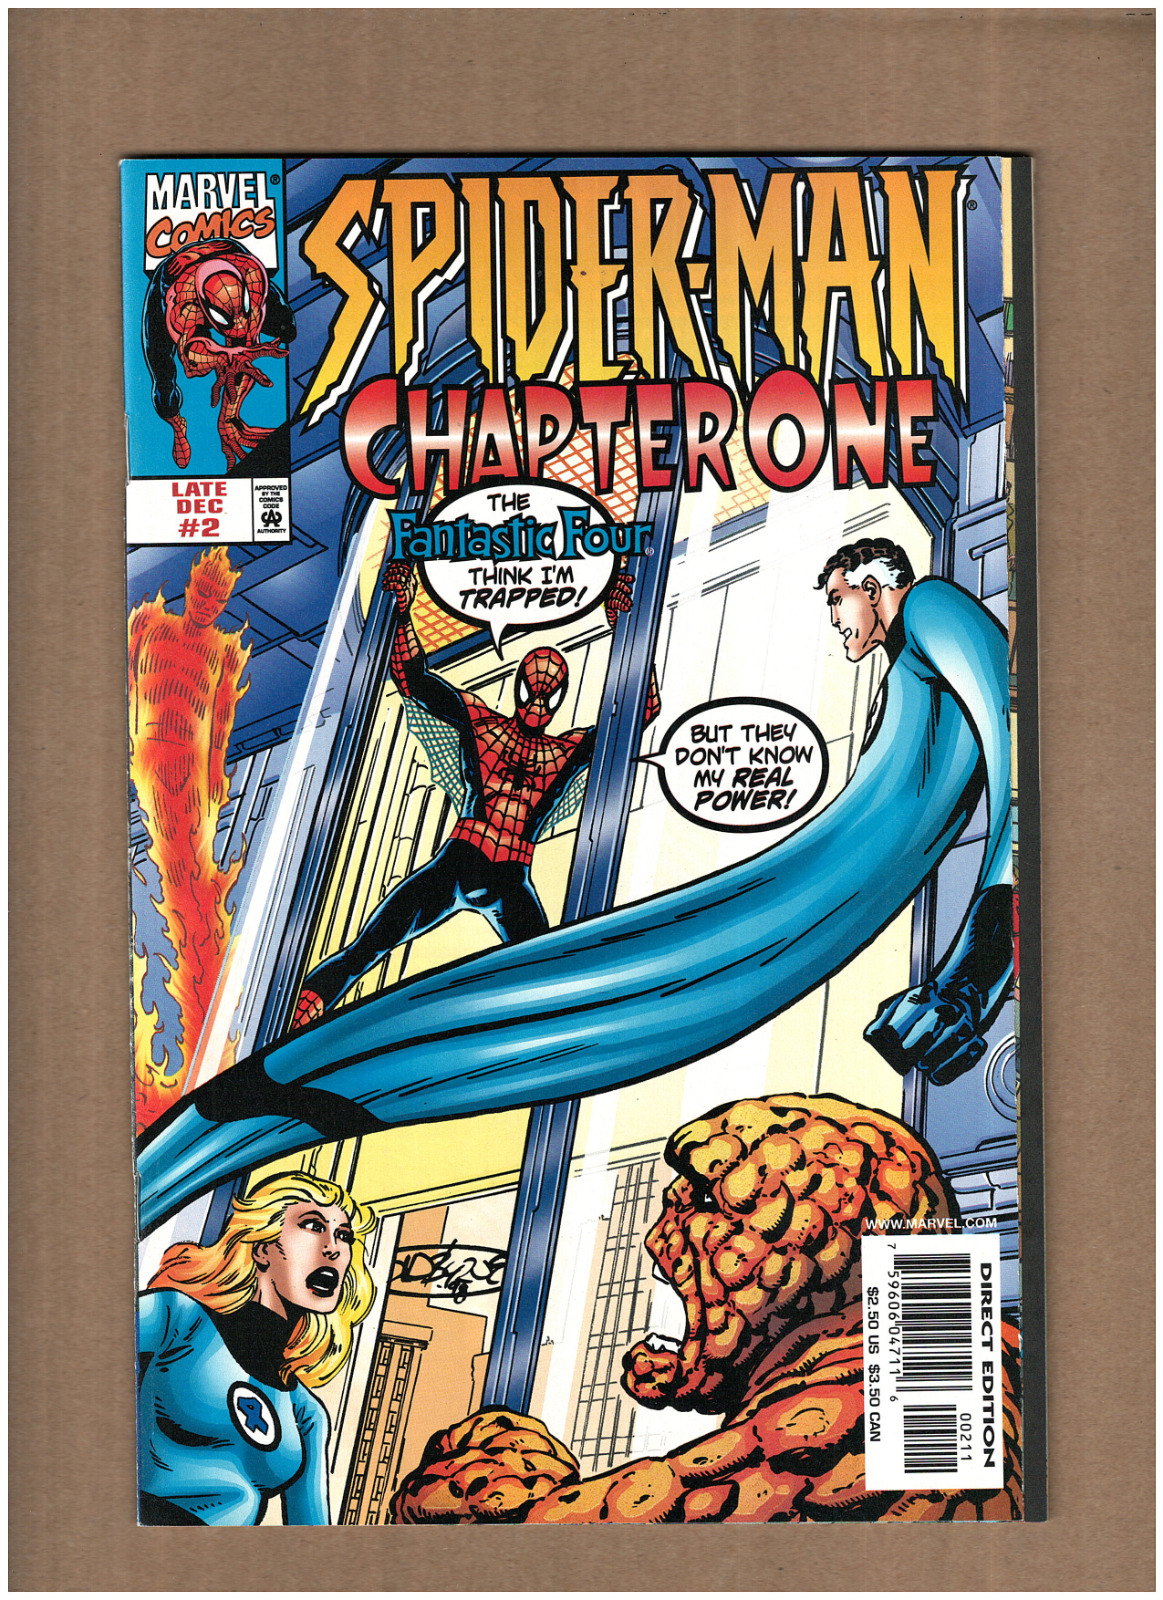 Spider-man Chapter One #2 Marvel Comics 1998 John Byrne FANTASTIC FOUR APP NM-